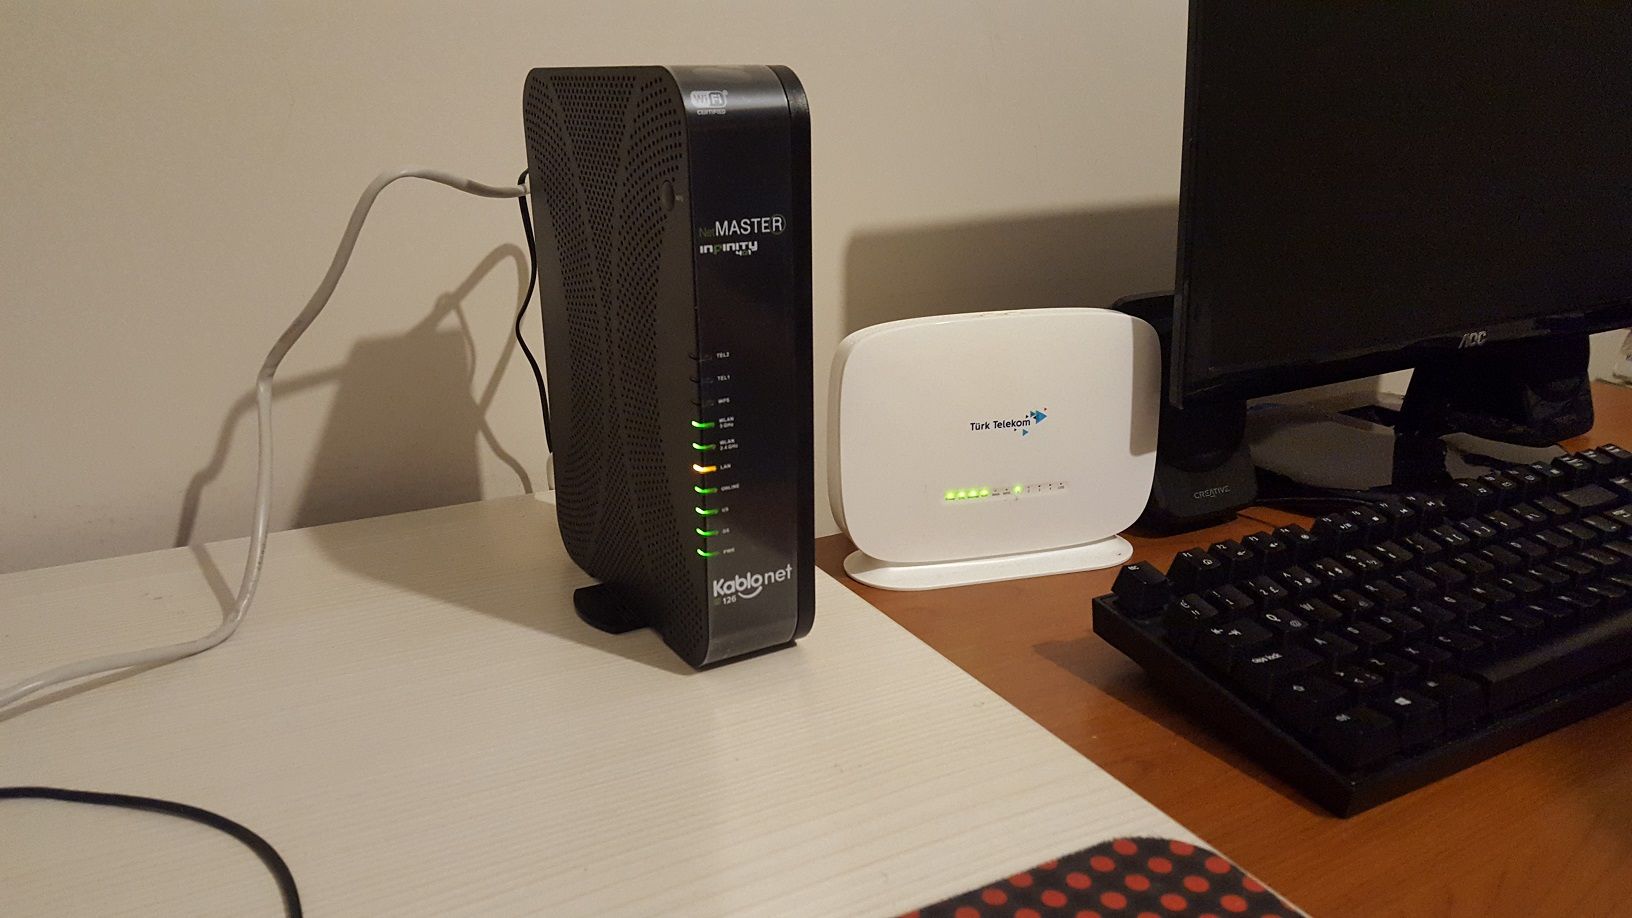 Kablonet 100 Mbps Bağlatıyorum - Ekim 2019 | Technopat Sosyal